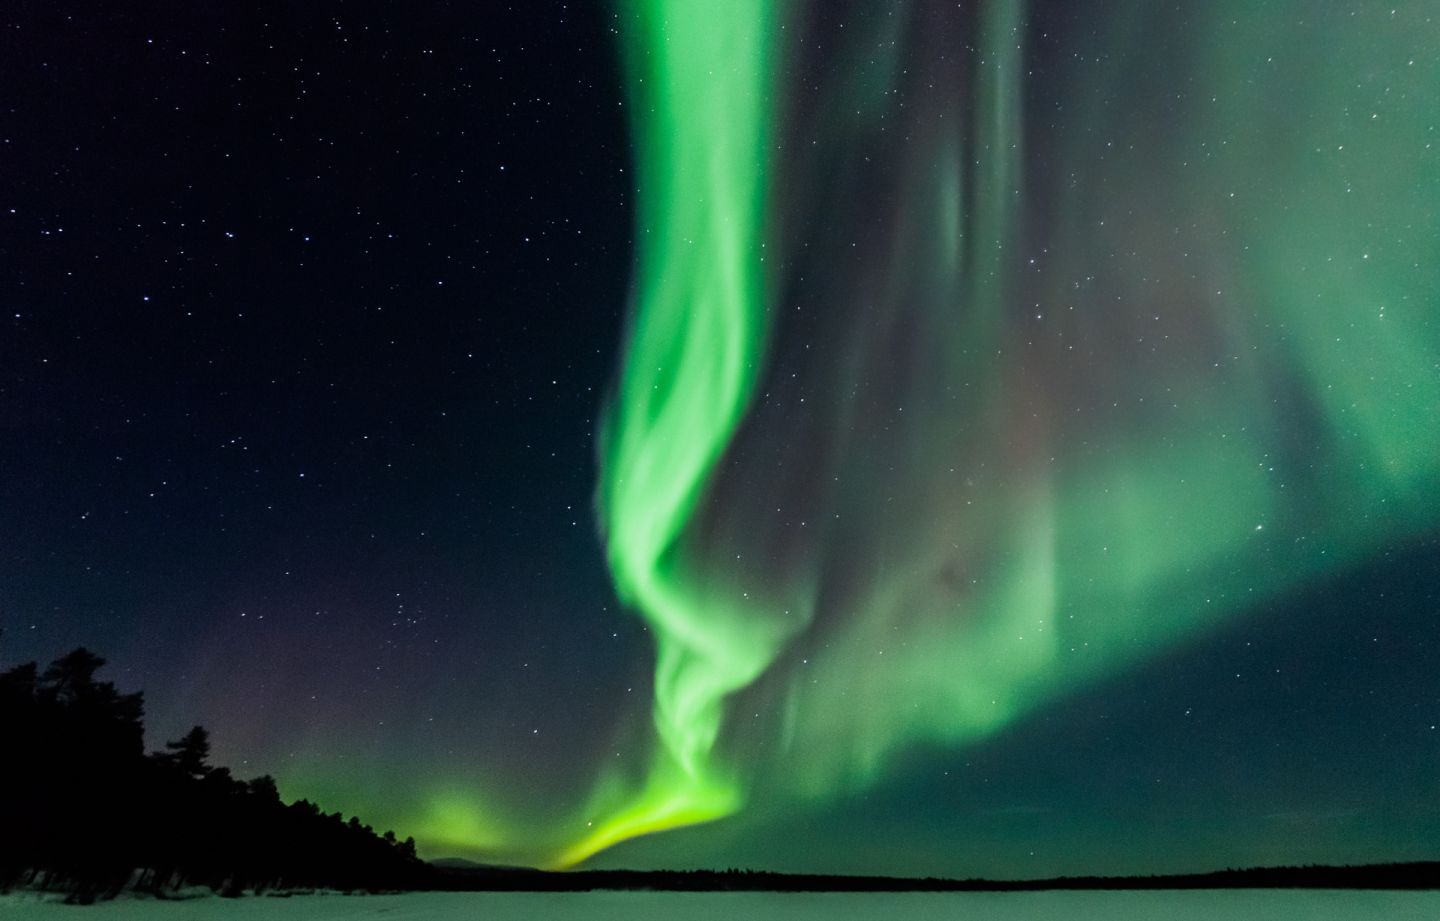 The Northern Lights over Inari-Saariselkä, Finland